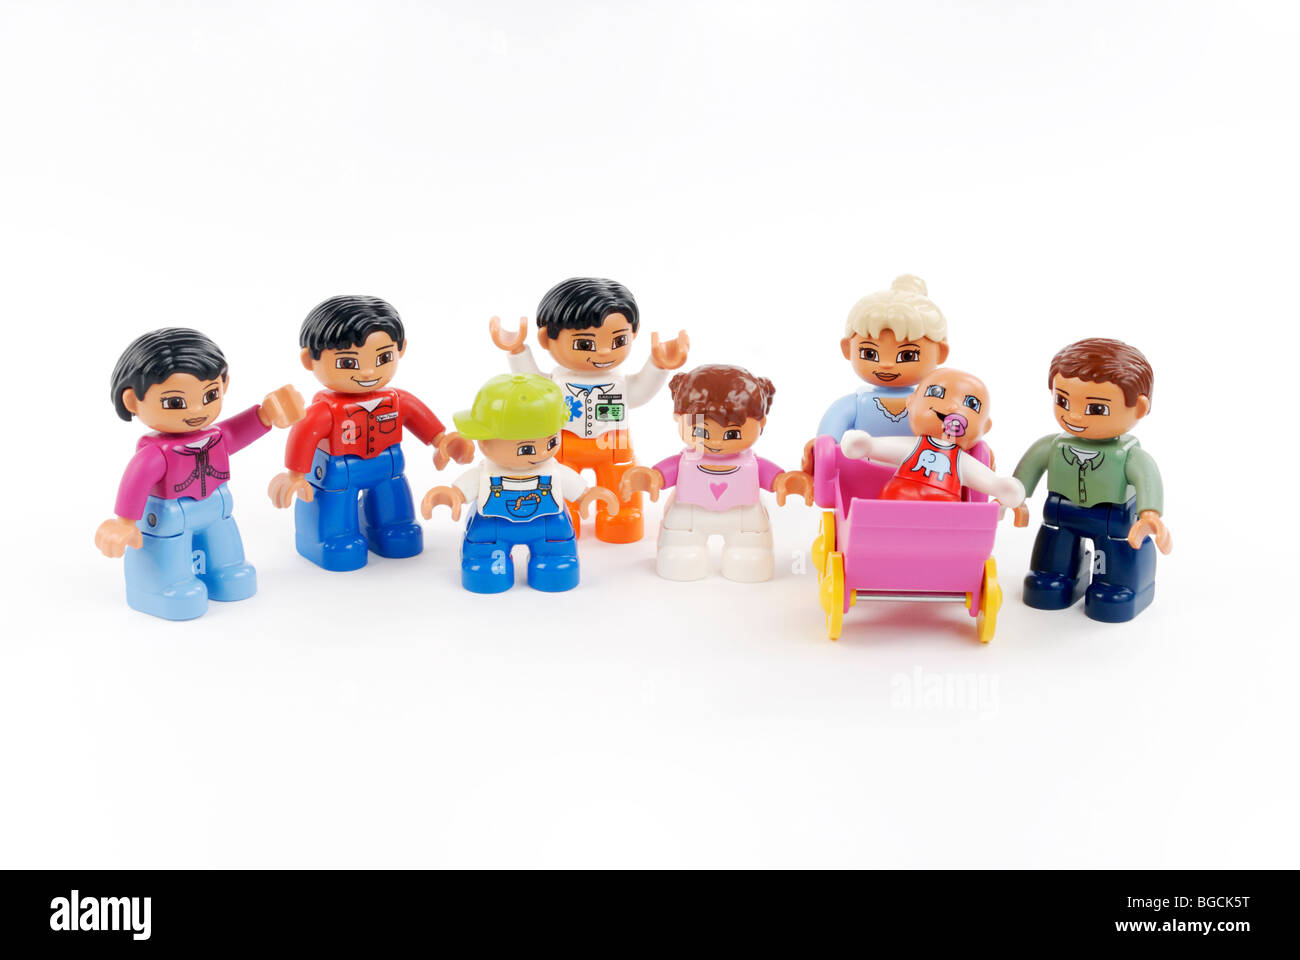 Lego Duplo Figuren Stockfotografie - Alamy